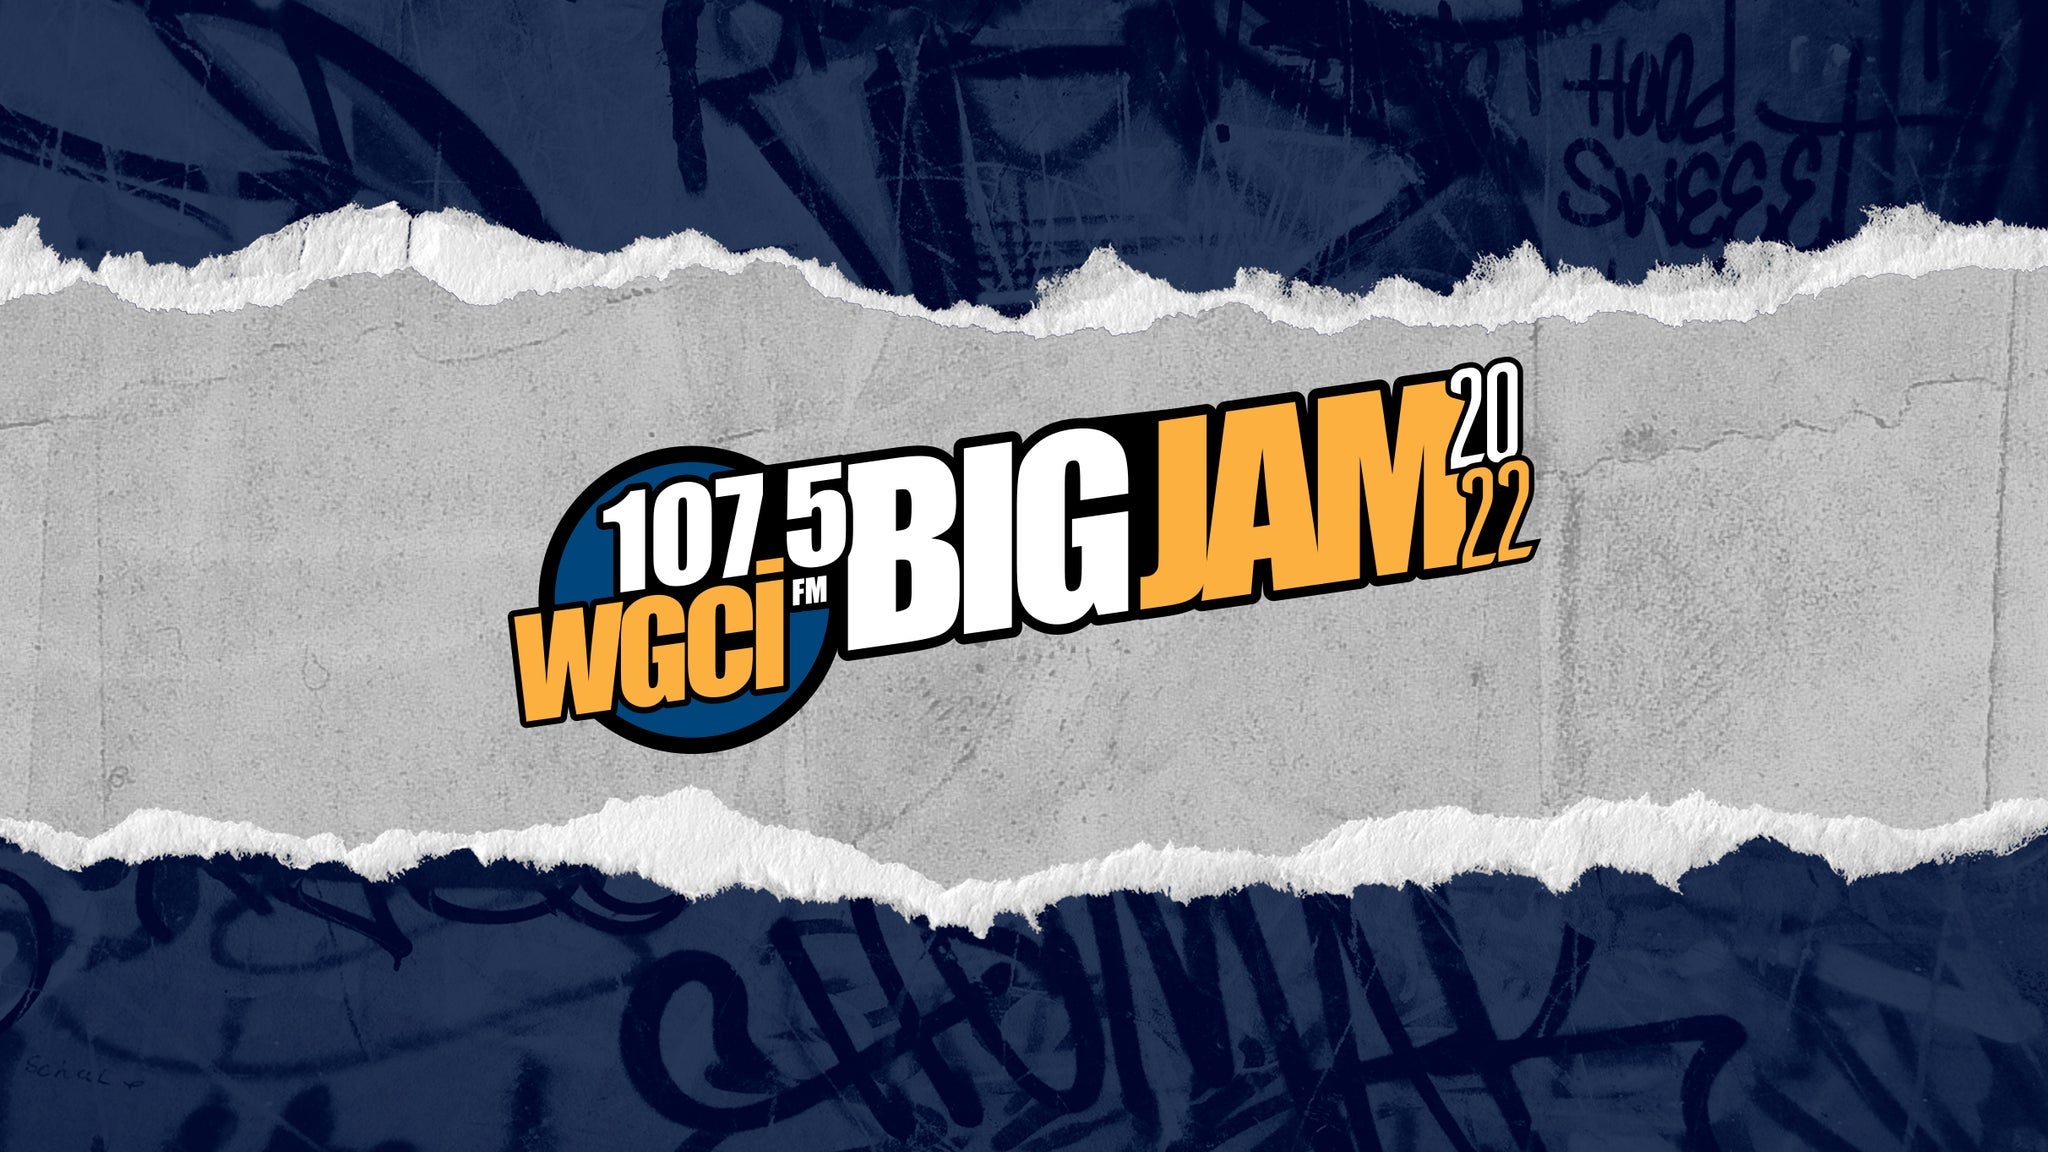 WGCI Big Jam in Chicago promo photo for Official Platinum presale offer code